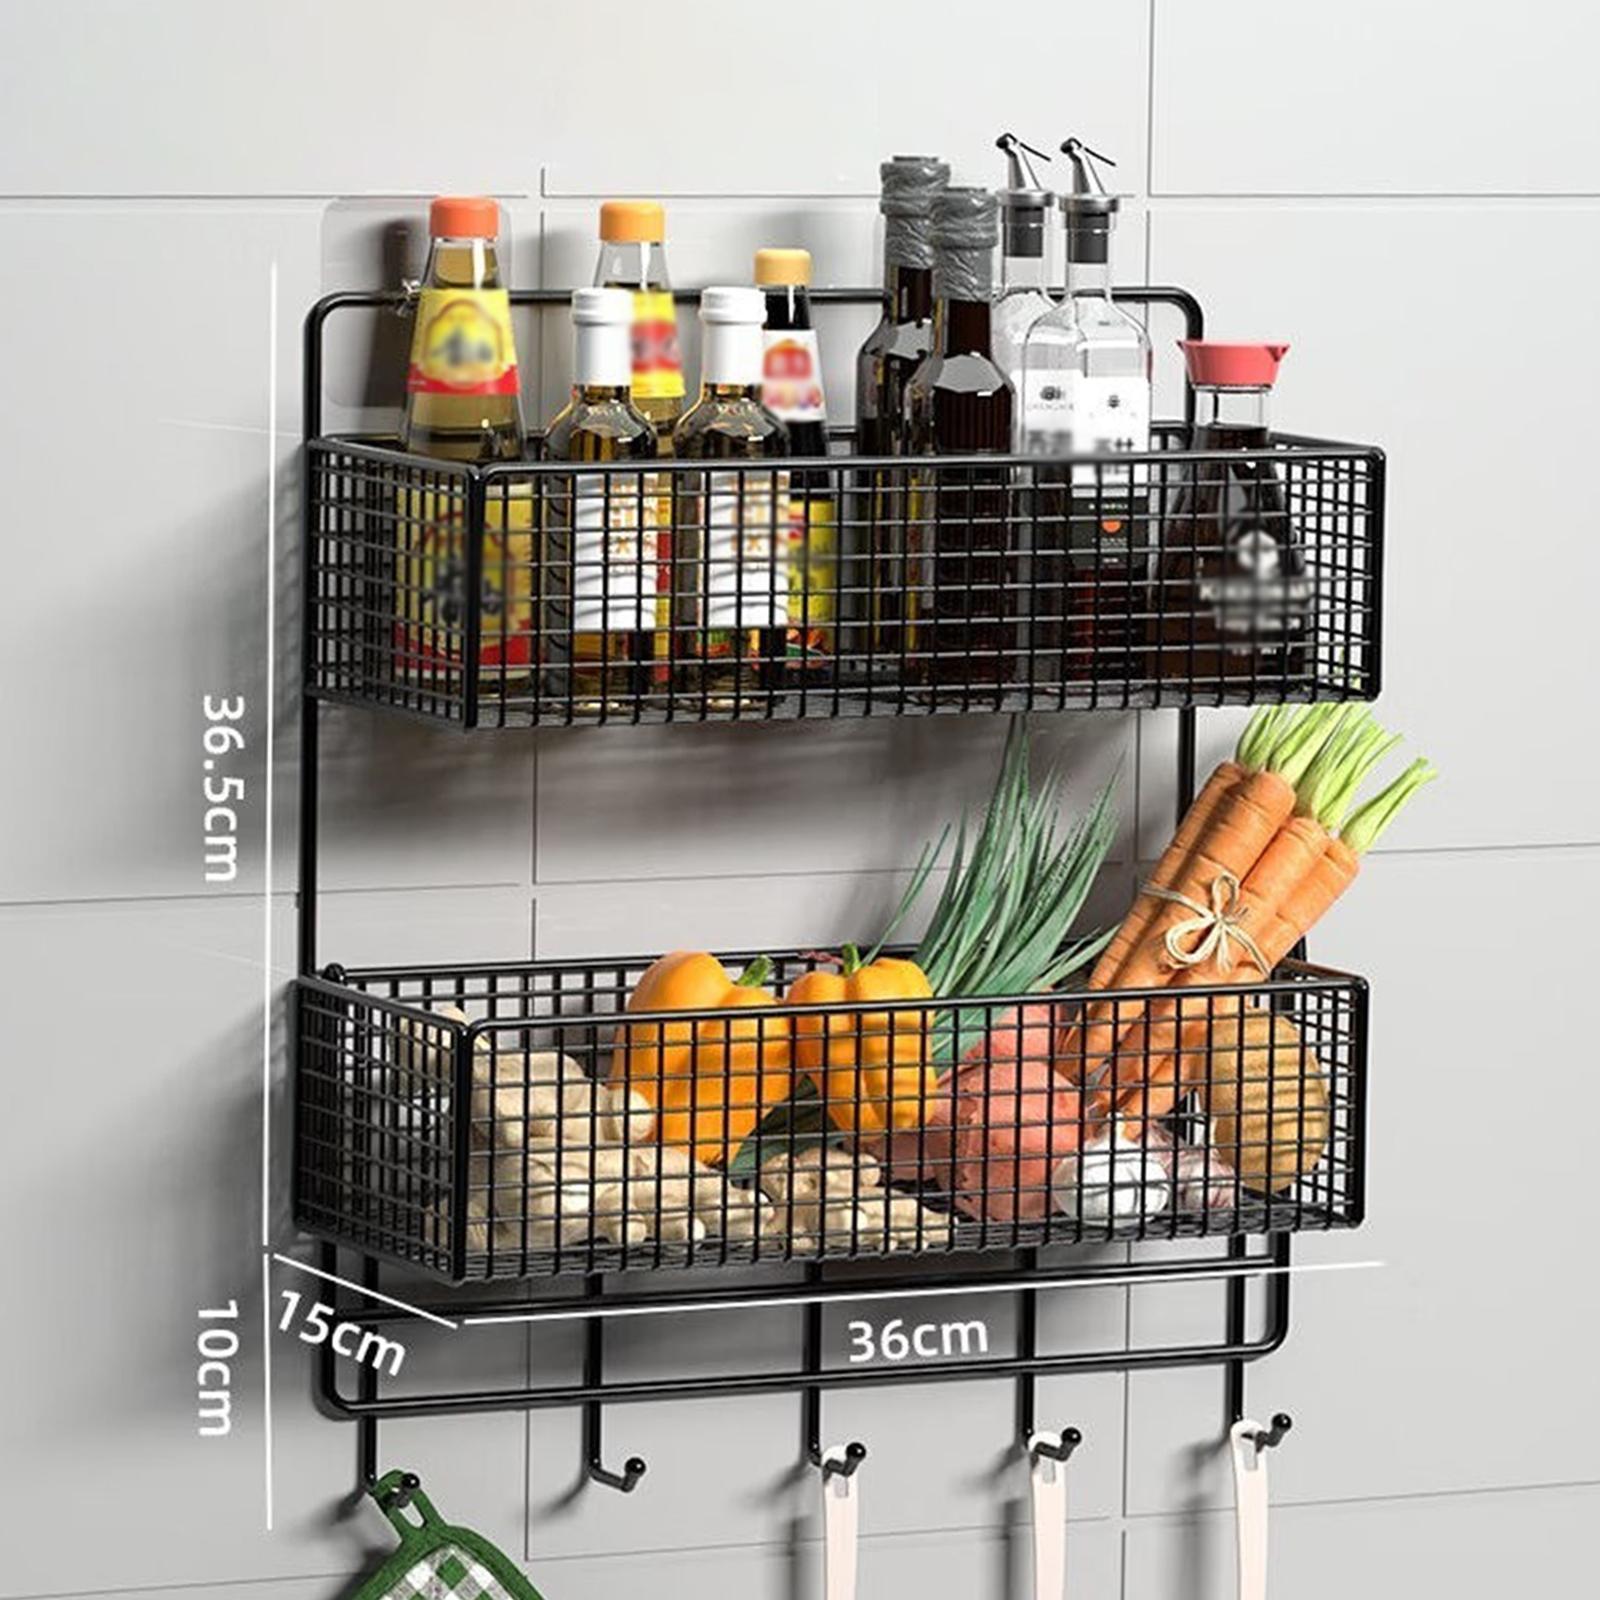 Minimalist Hanging Fruit Basket Wall Mounted Shelves for Bathroom Craft Room